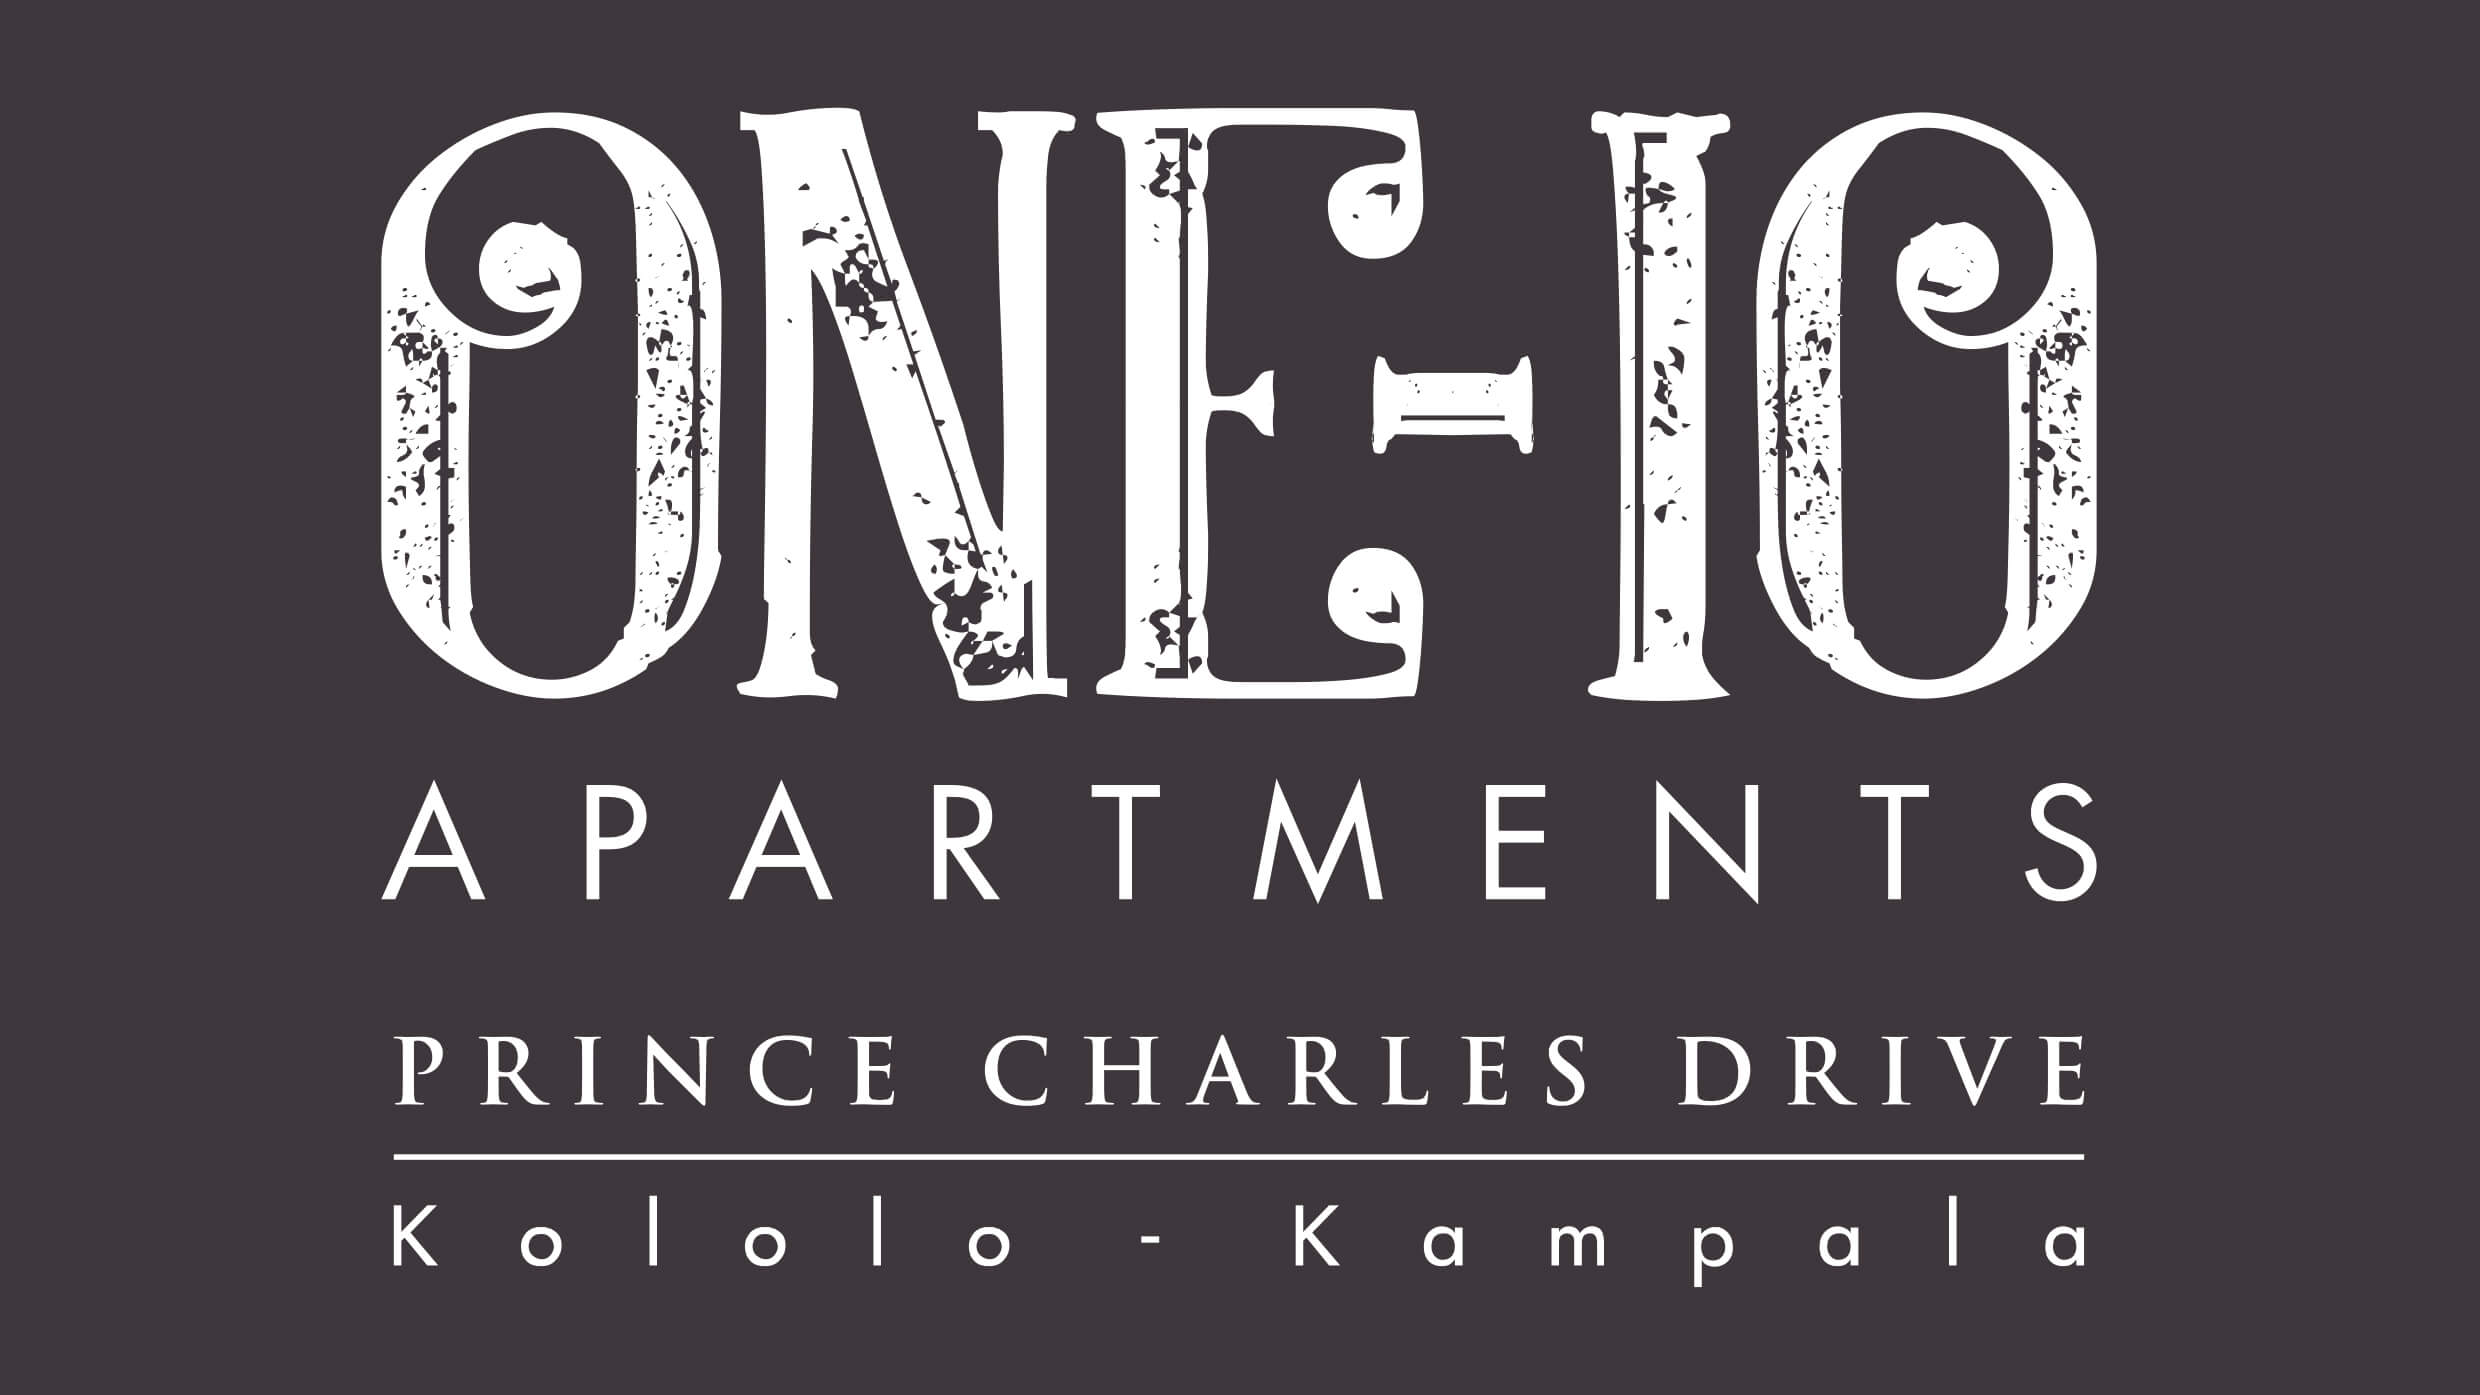 One 10 apartments logo